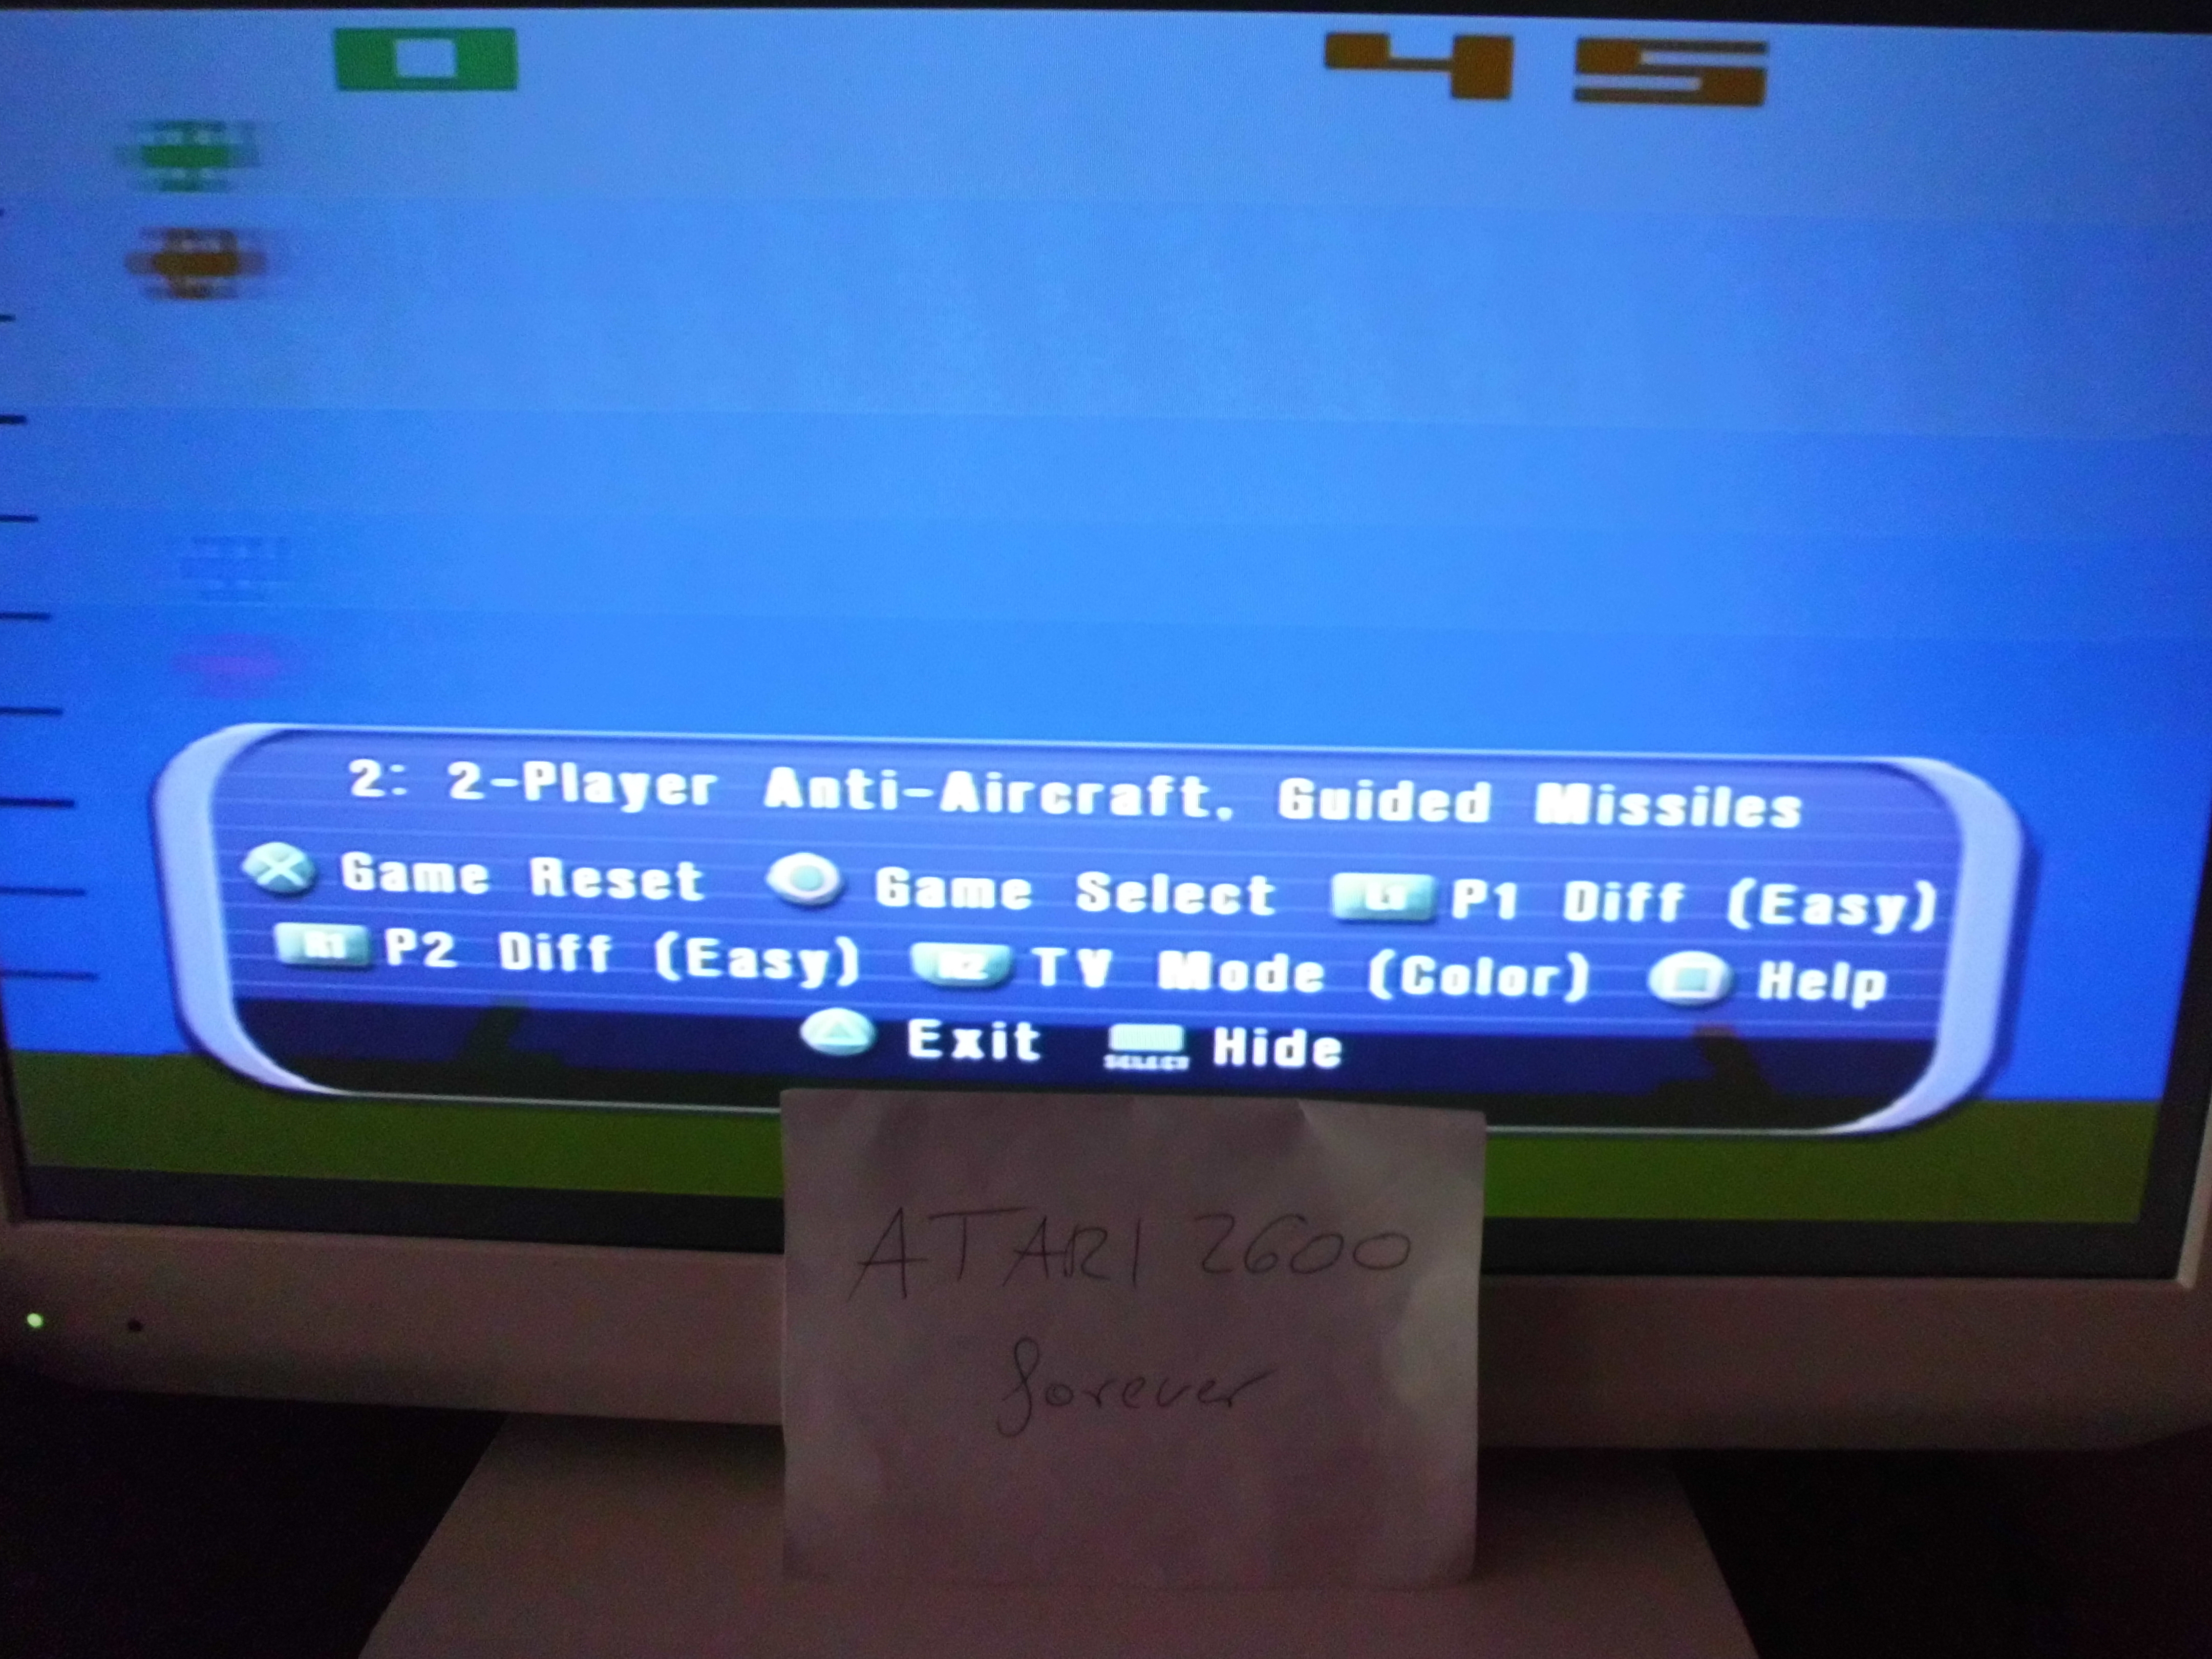 atari2600forever: Atari Anthology: Air-Sea Battle [Game 2B] (Playstation 2) 45 points on 2018-05-02 08:15:47